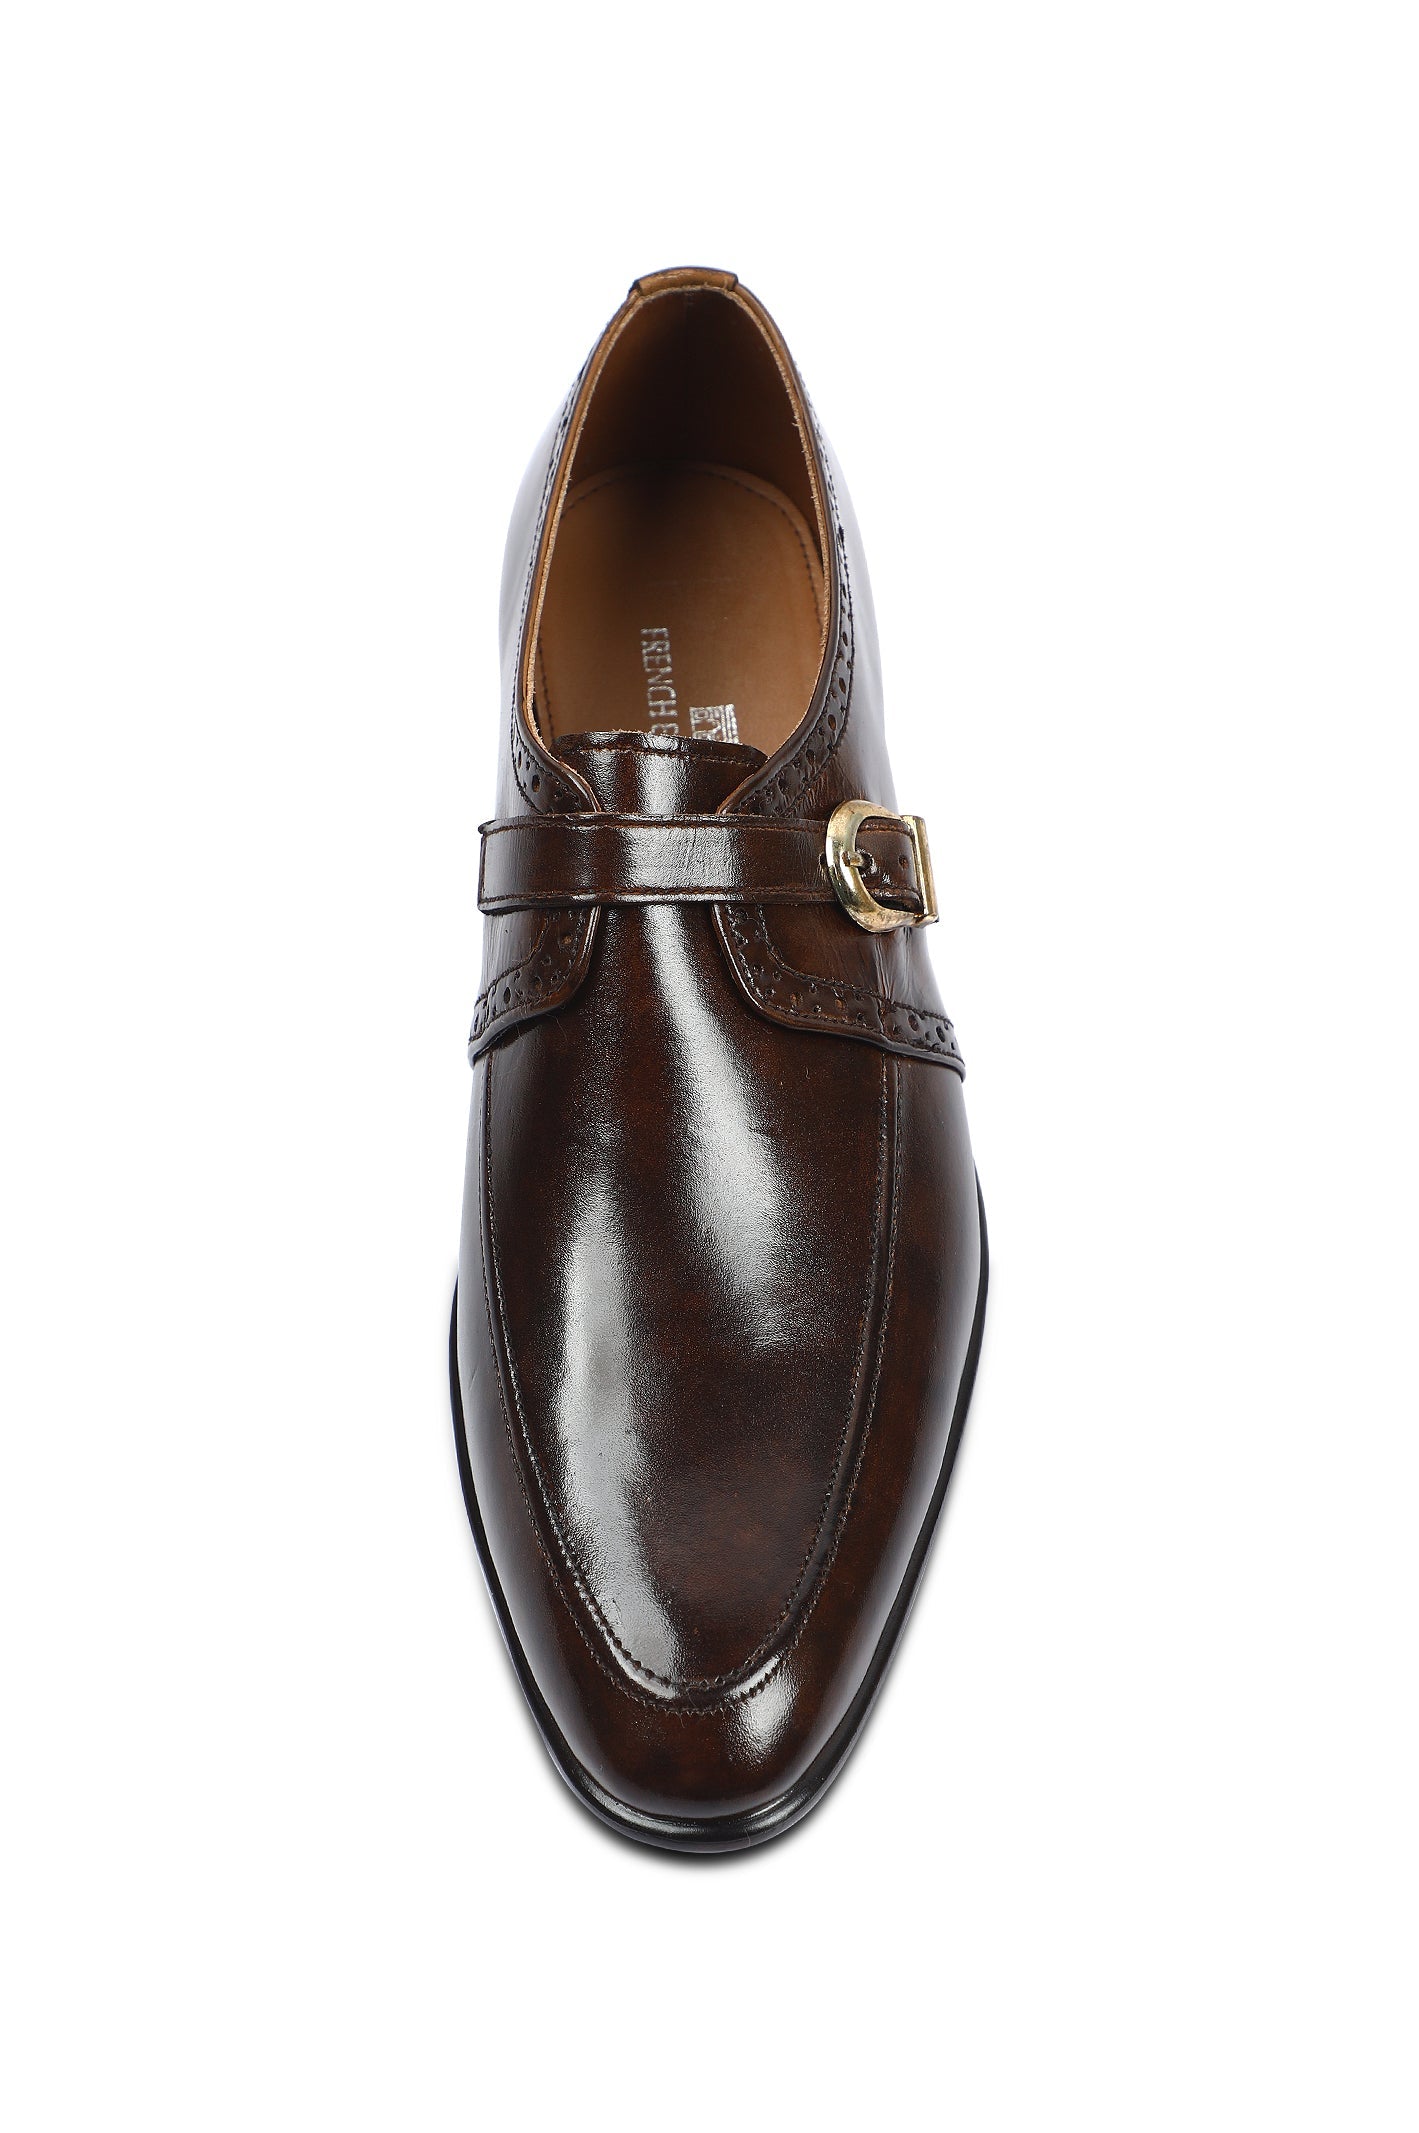 Formal Shoes For Men in Brown SKU: SMF-0228-BROWN - Diners